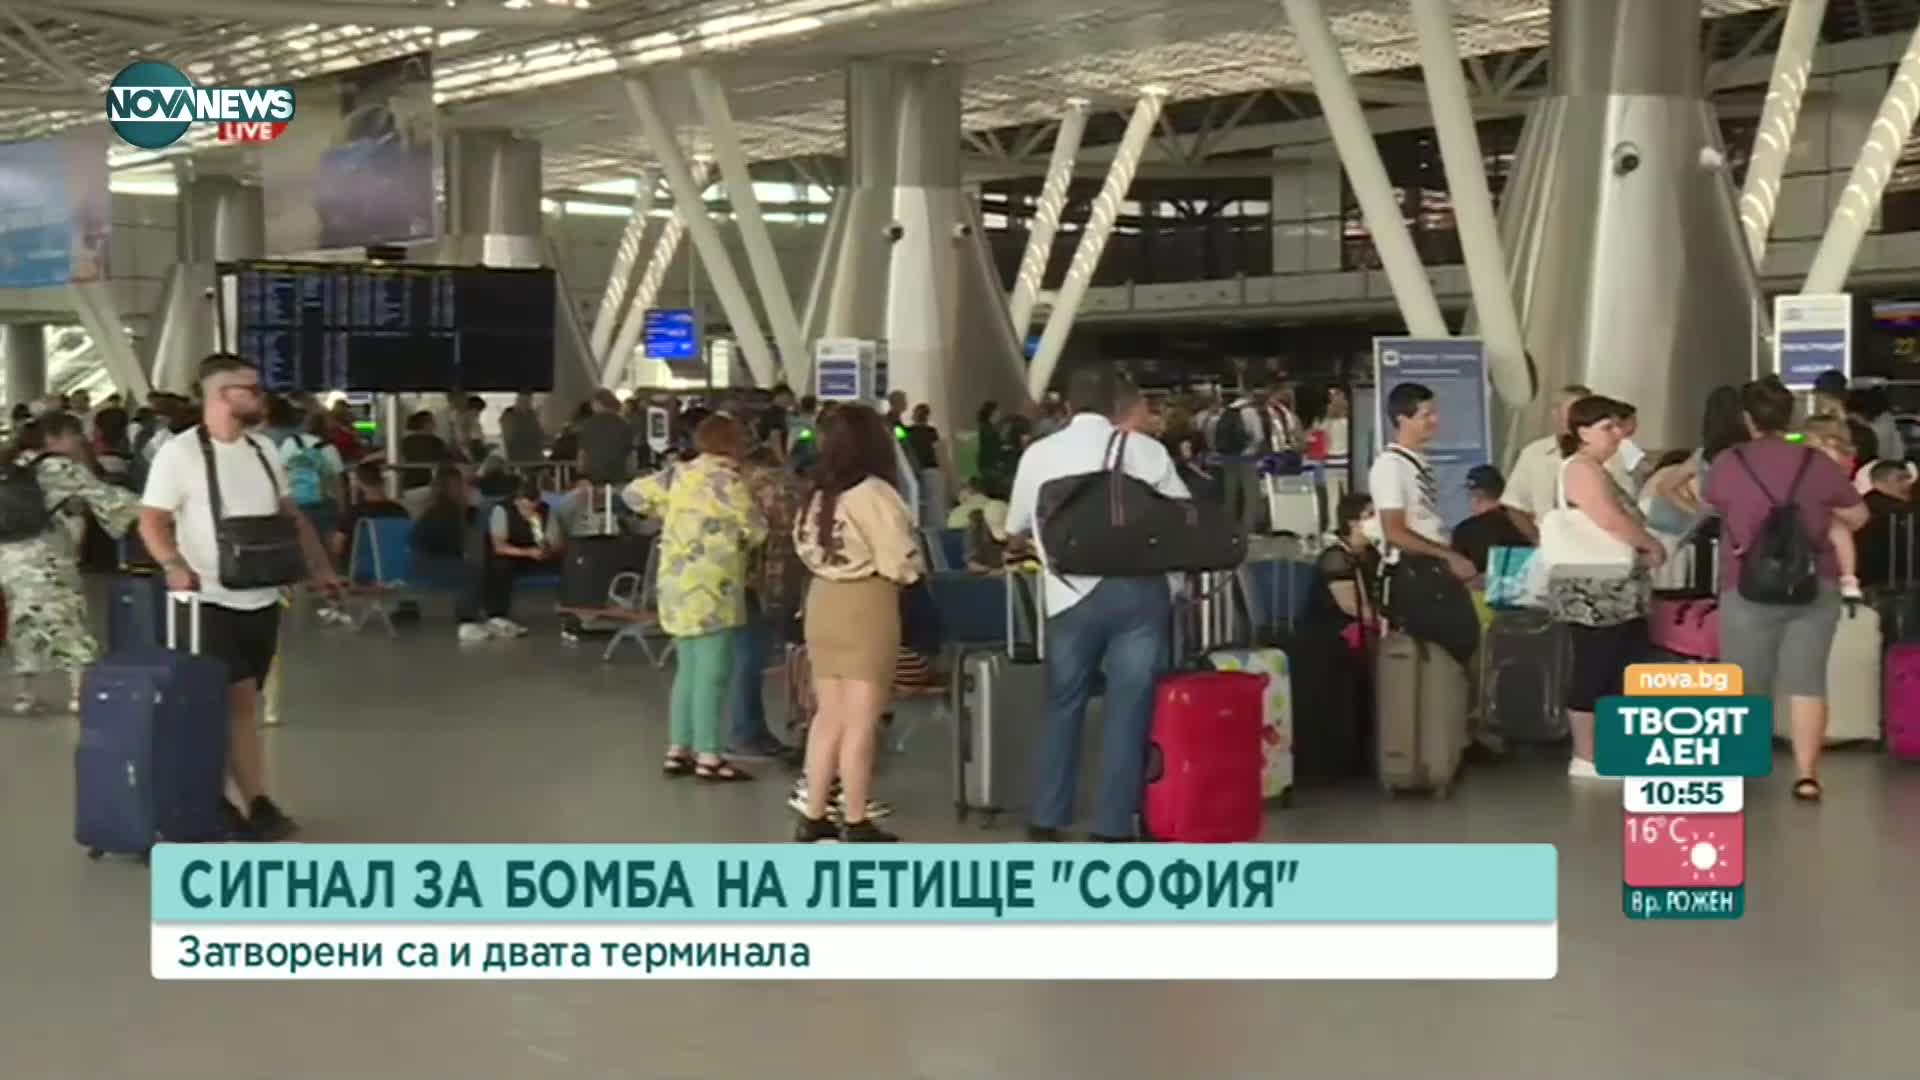 Сигнал за бомба затвори летище София